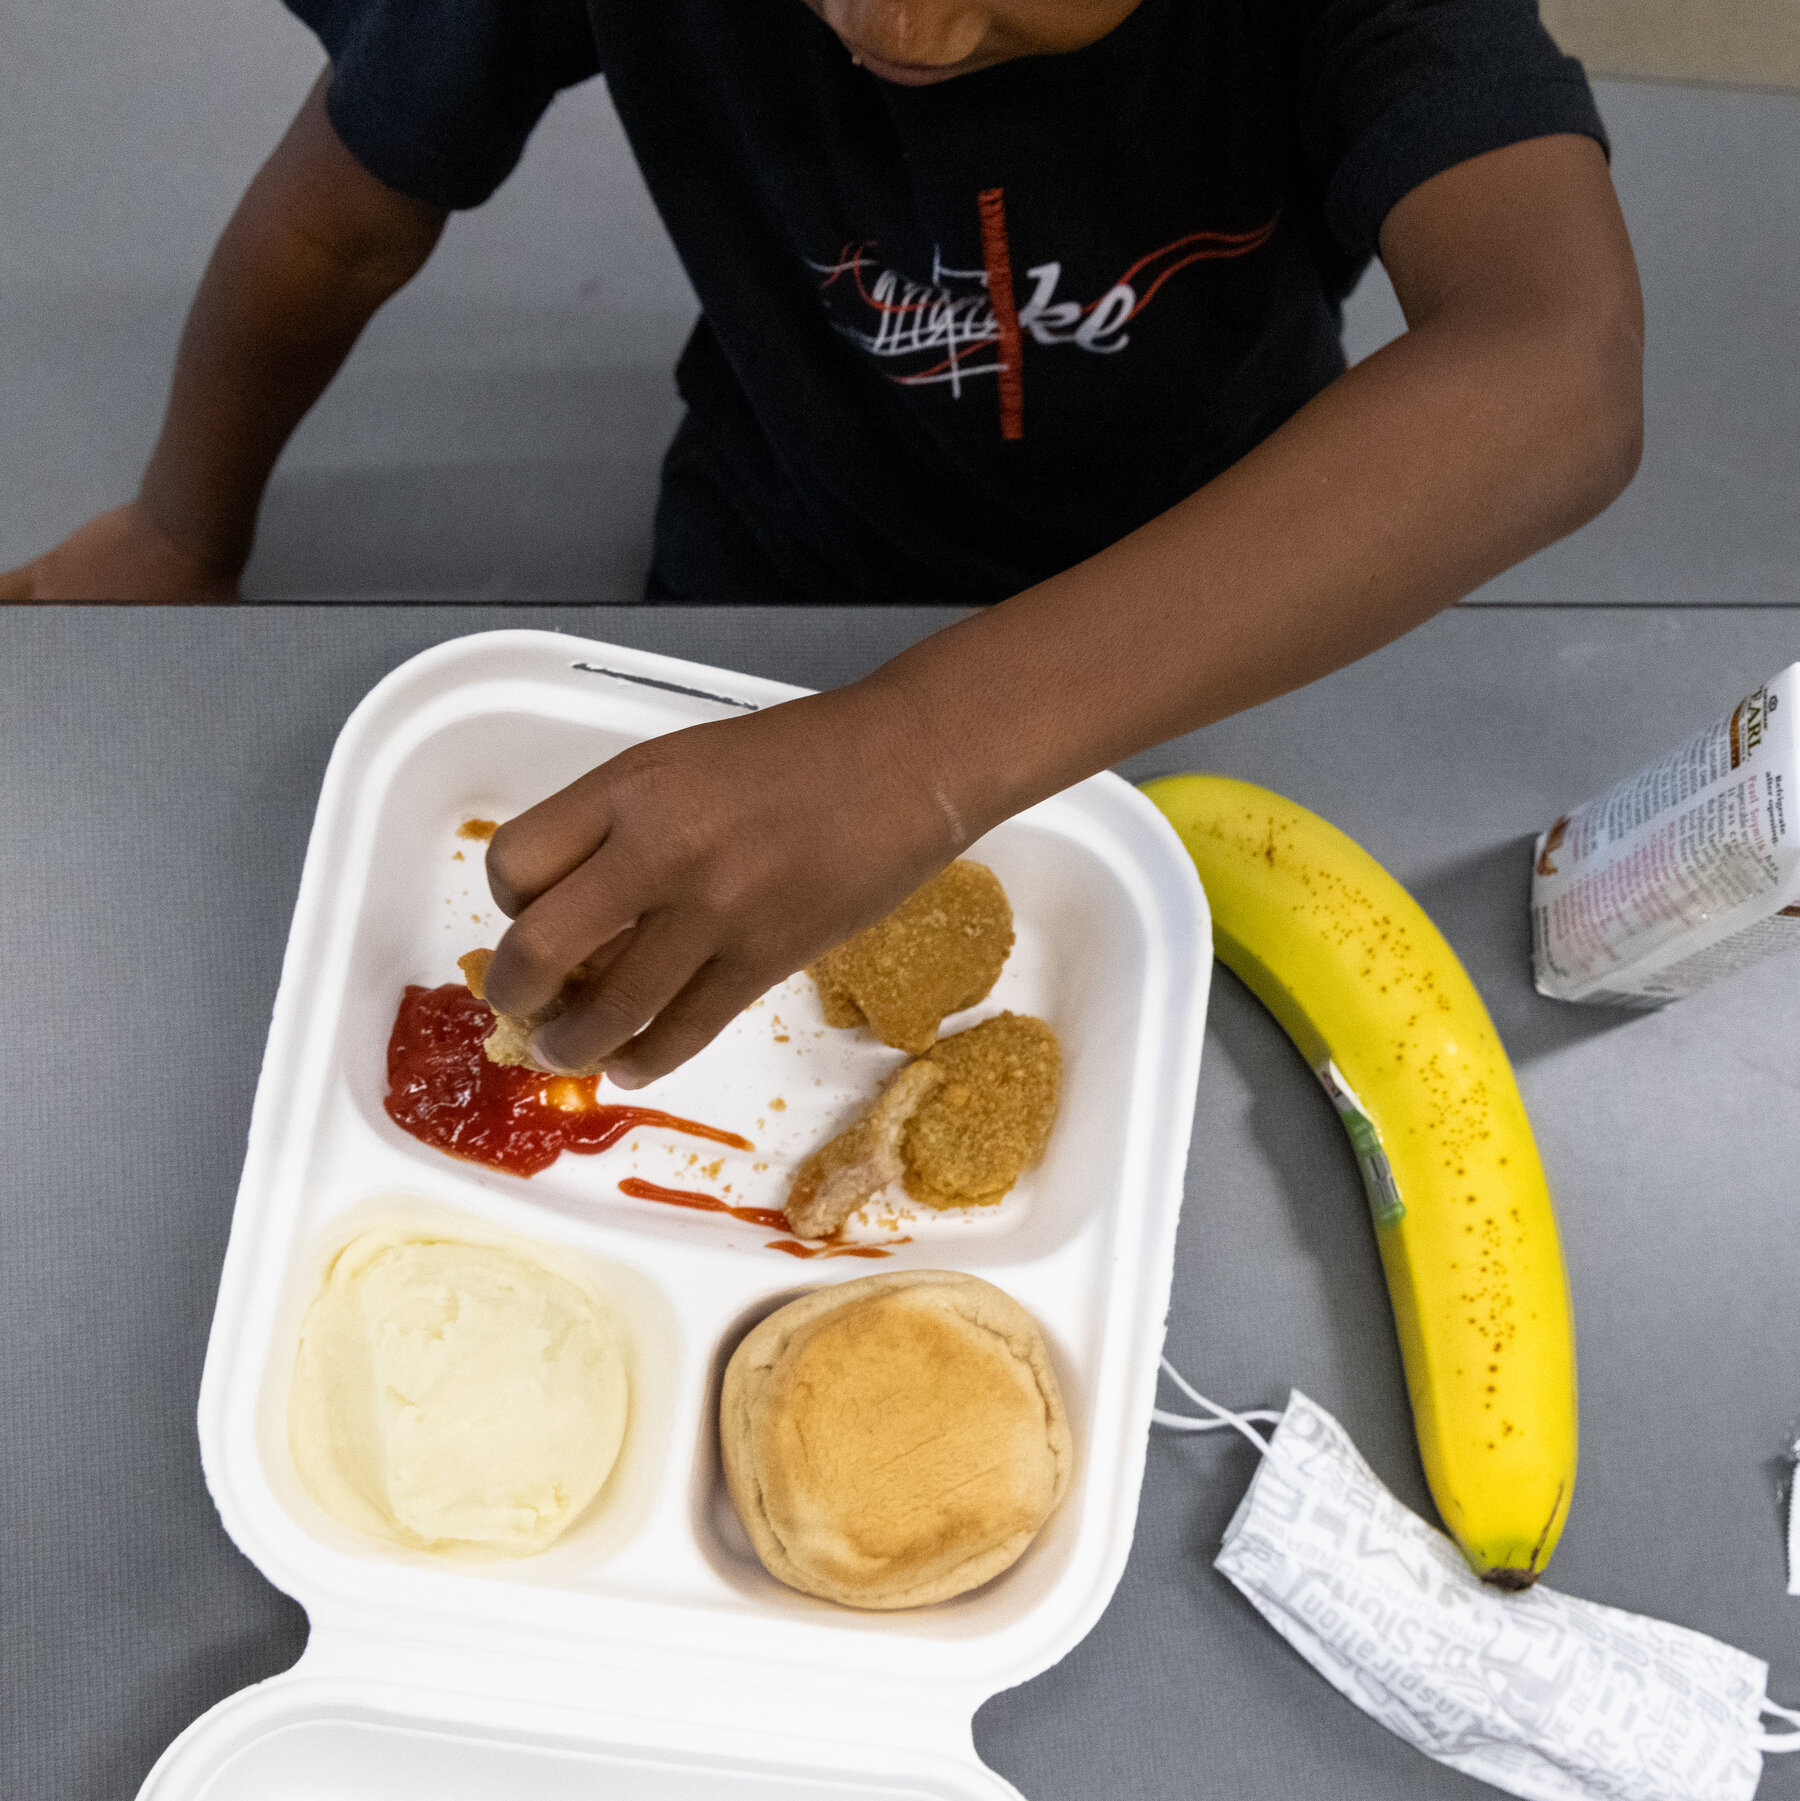 13 States Decline Summer Food Program for Kids Despite Rising Food Insecurity